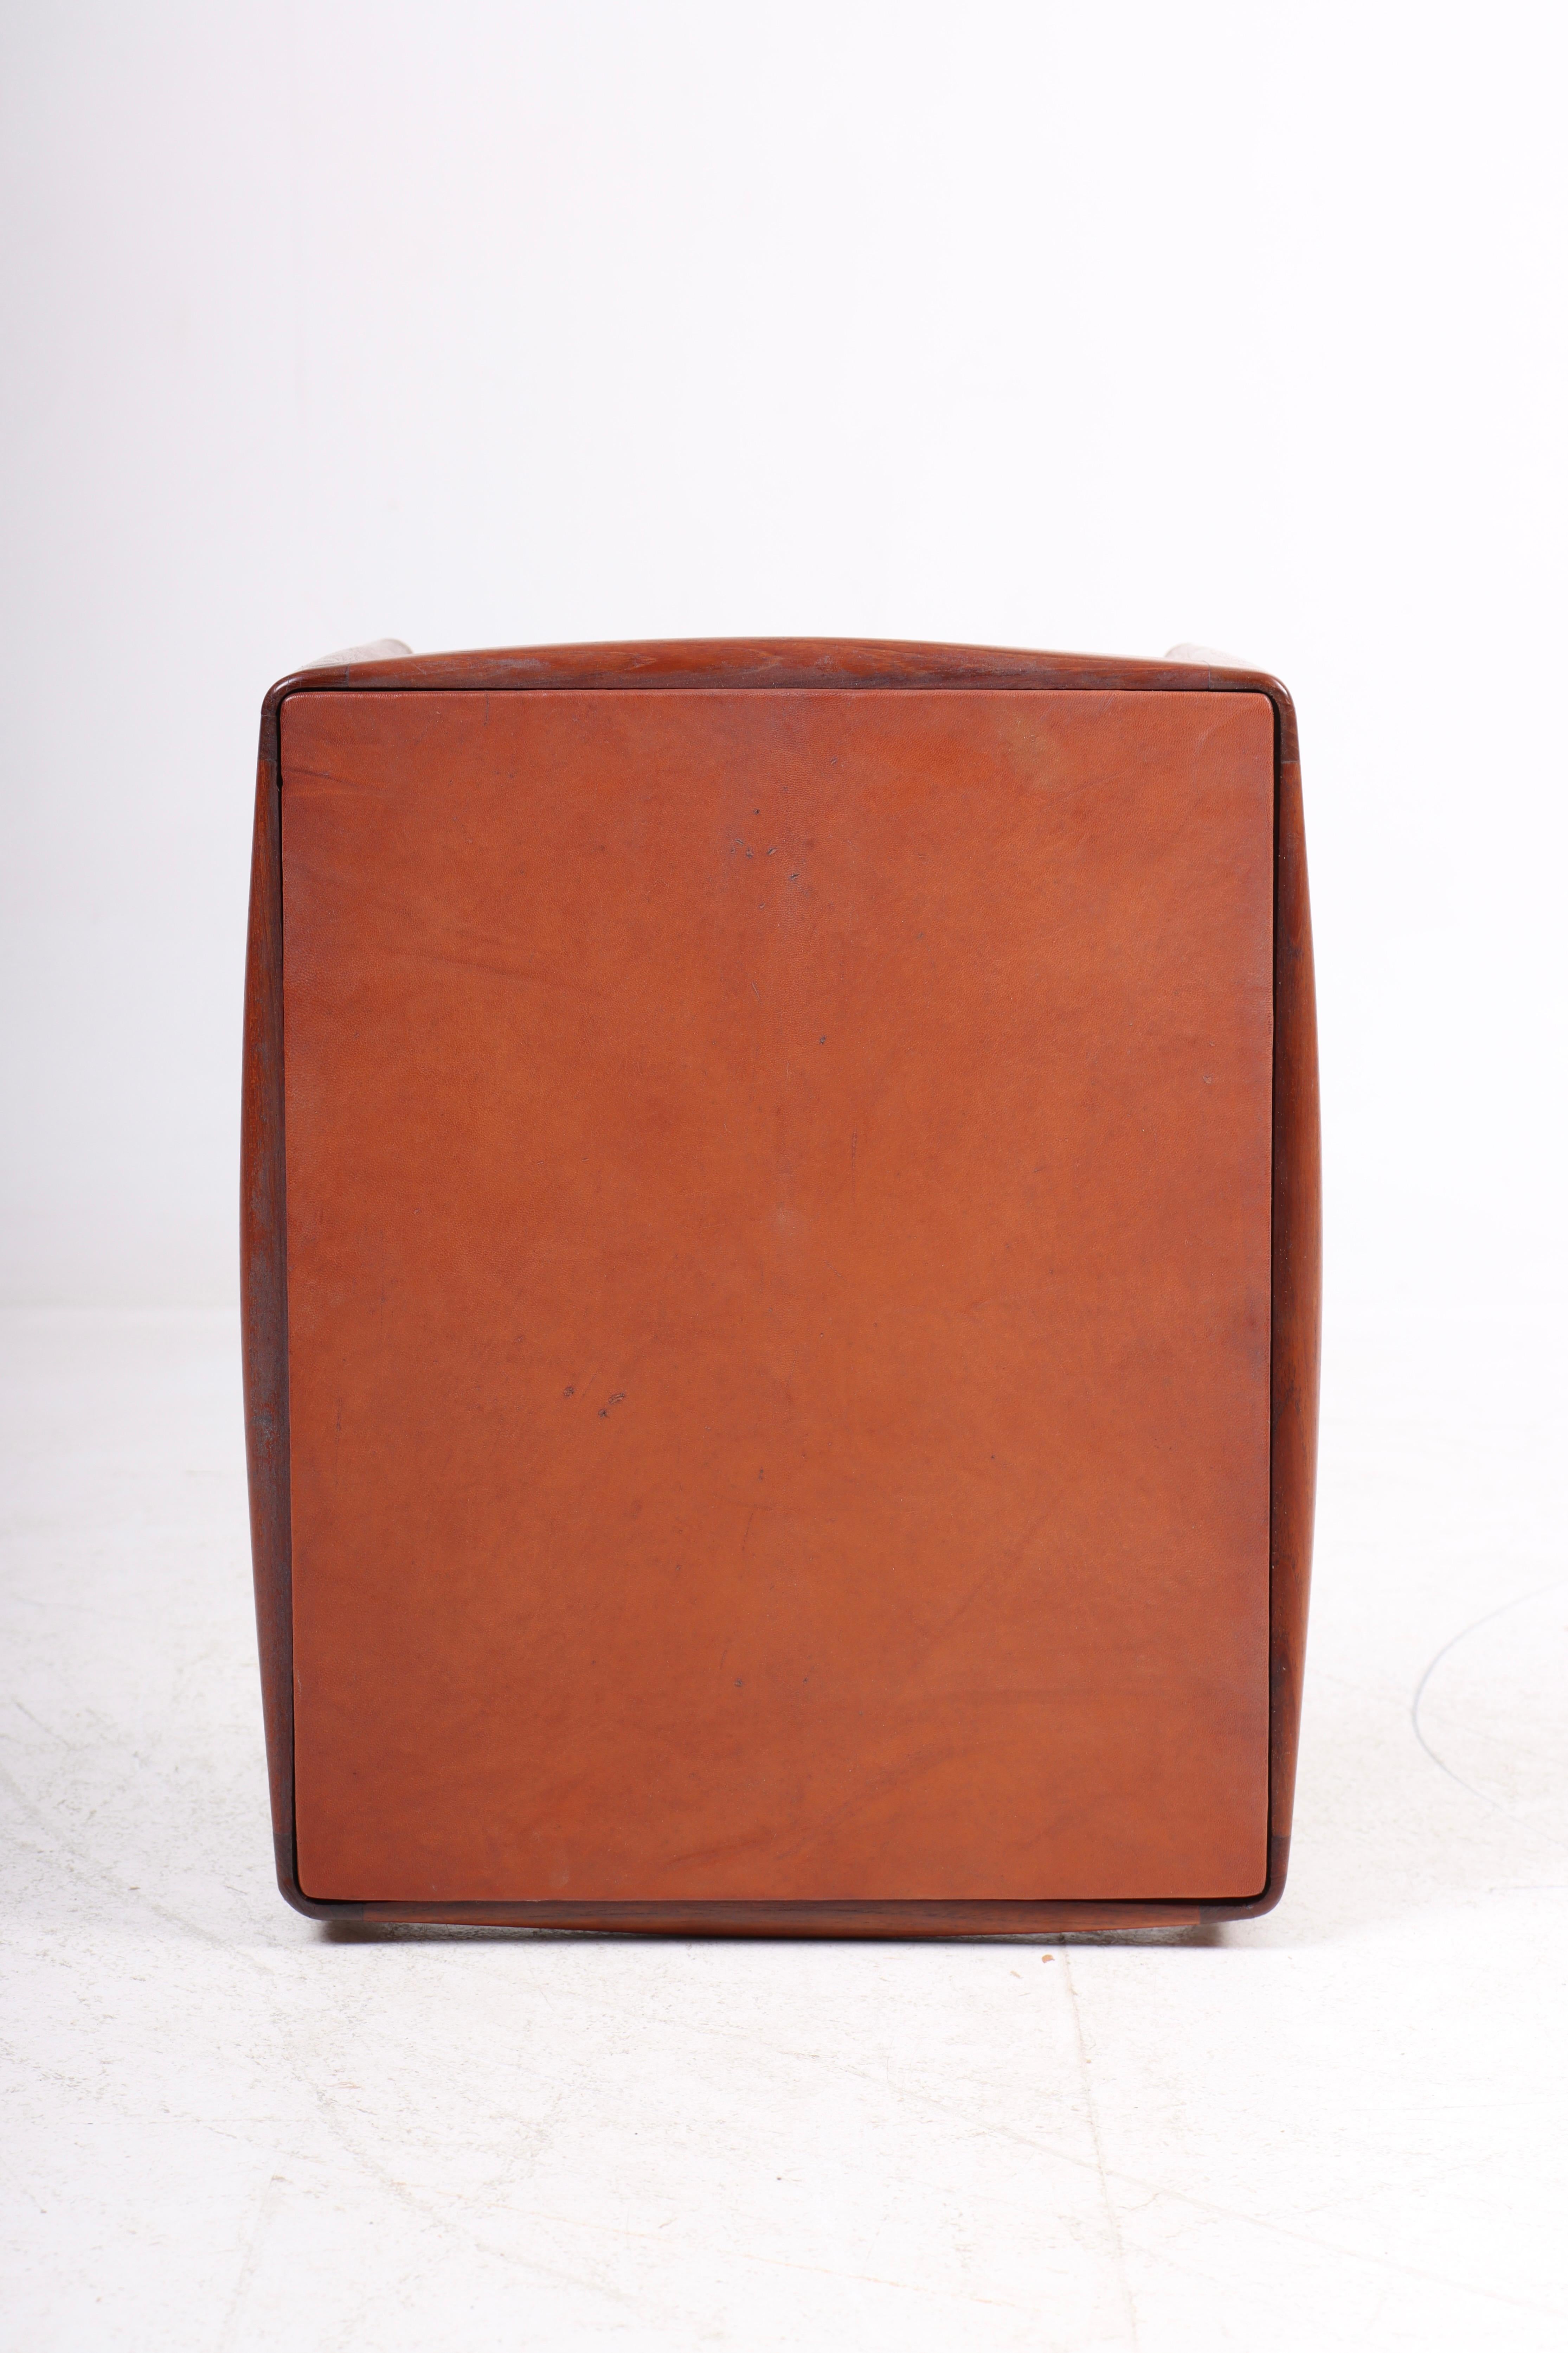 Rare Side Table in Teak and Leather by Ejner Larsen & Aksel Bender Madsen For Sale 1